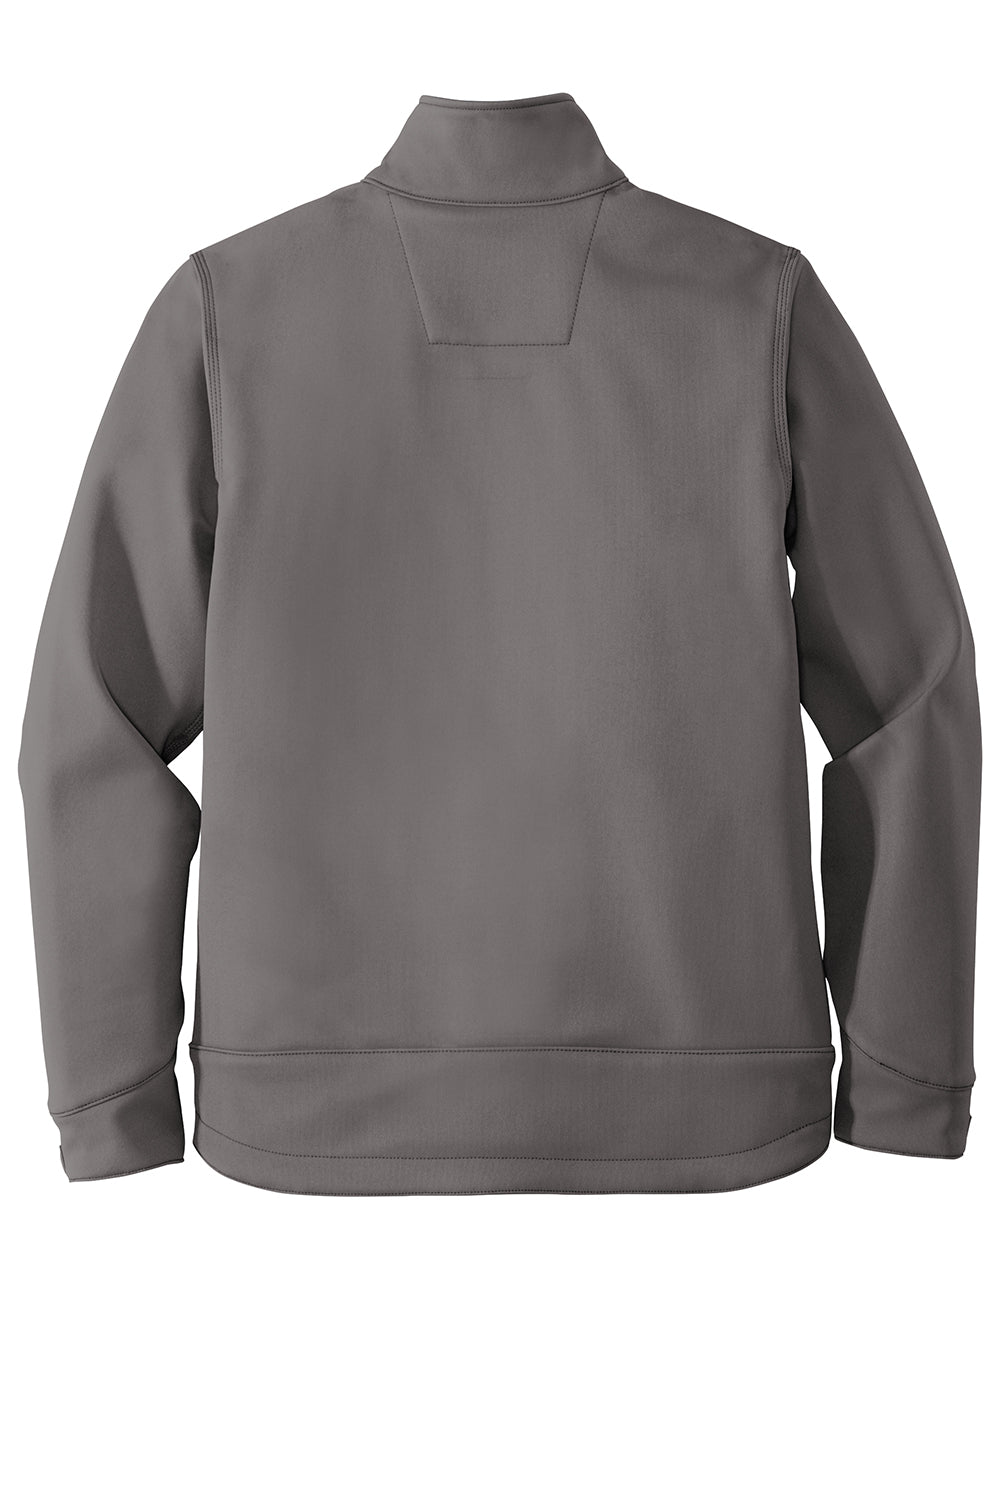 Carhartt CT102199 Mens Crowley Wind & Water Resistant Full Zip Jacket Charcoal Grey Flat Back